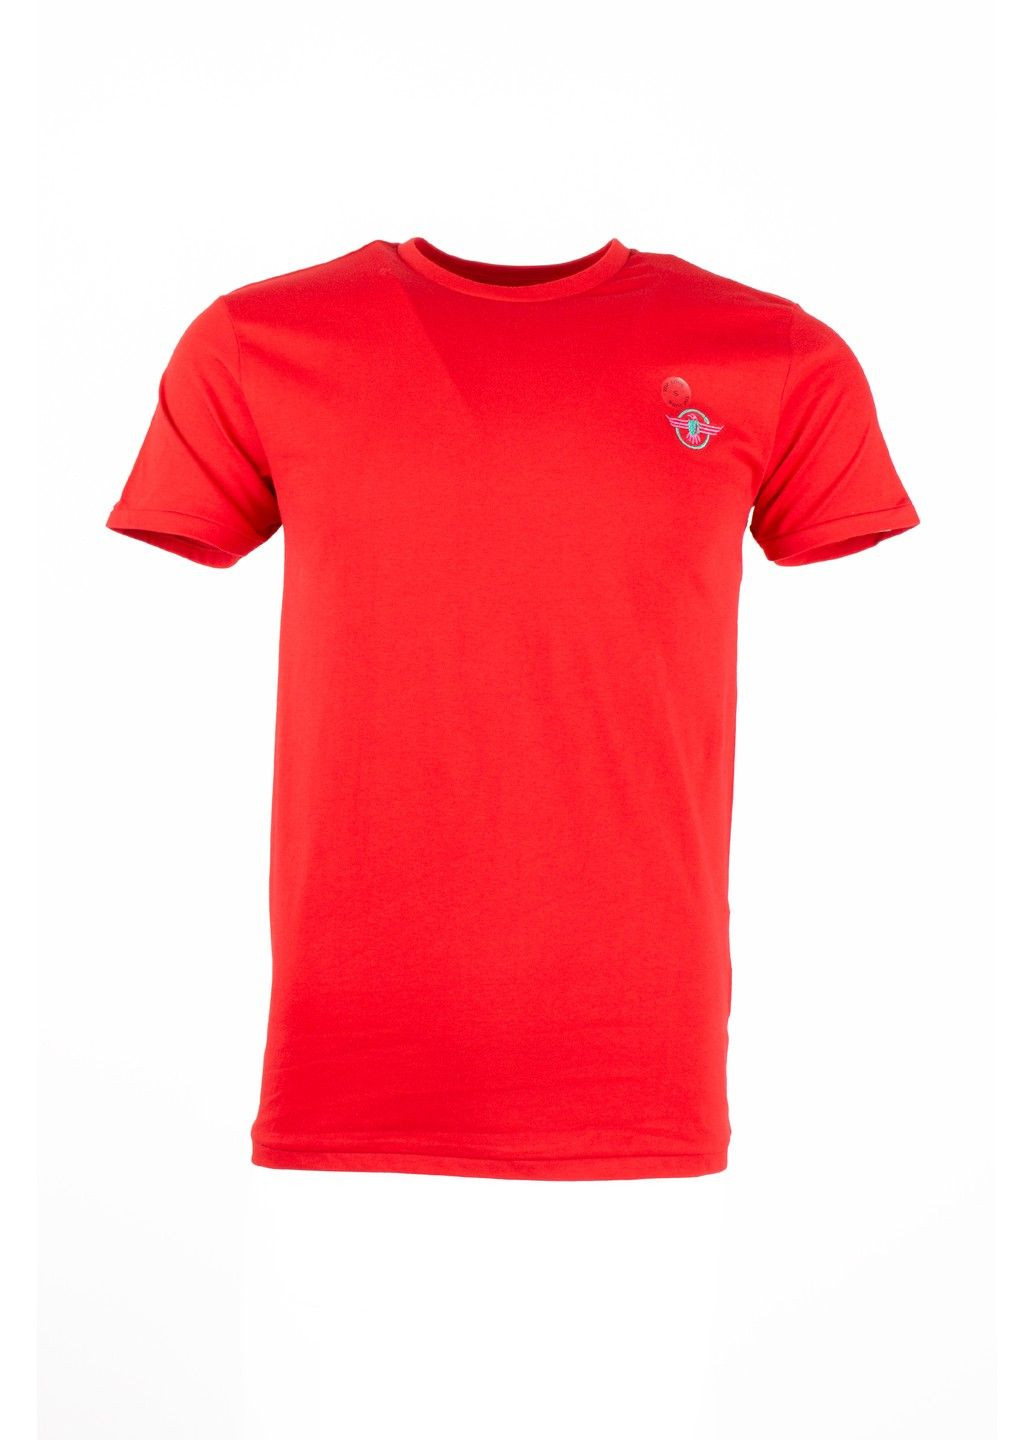 Червона футболка чоловіча top look червона 070821-001512 No Brand